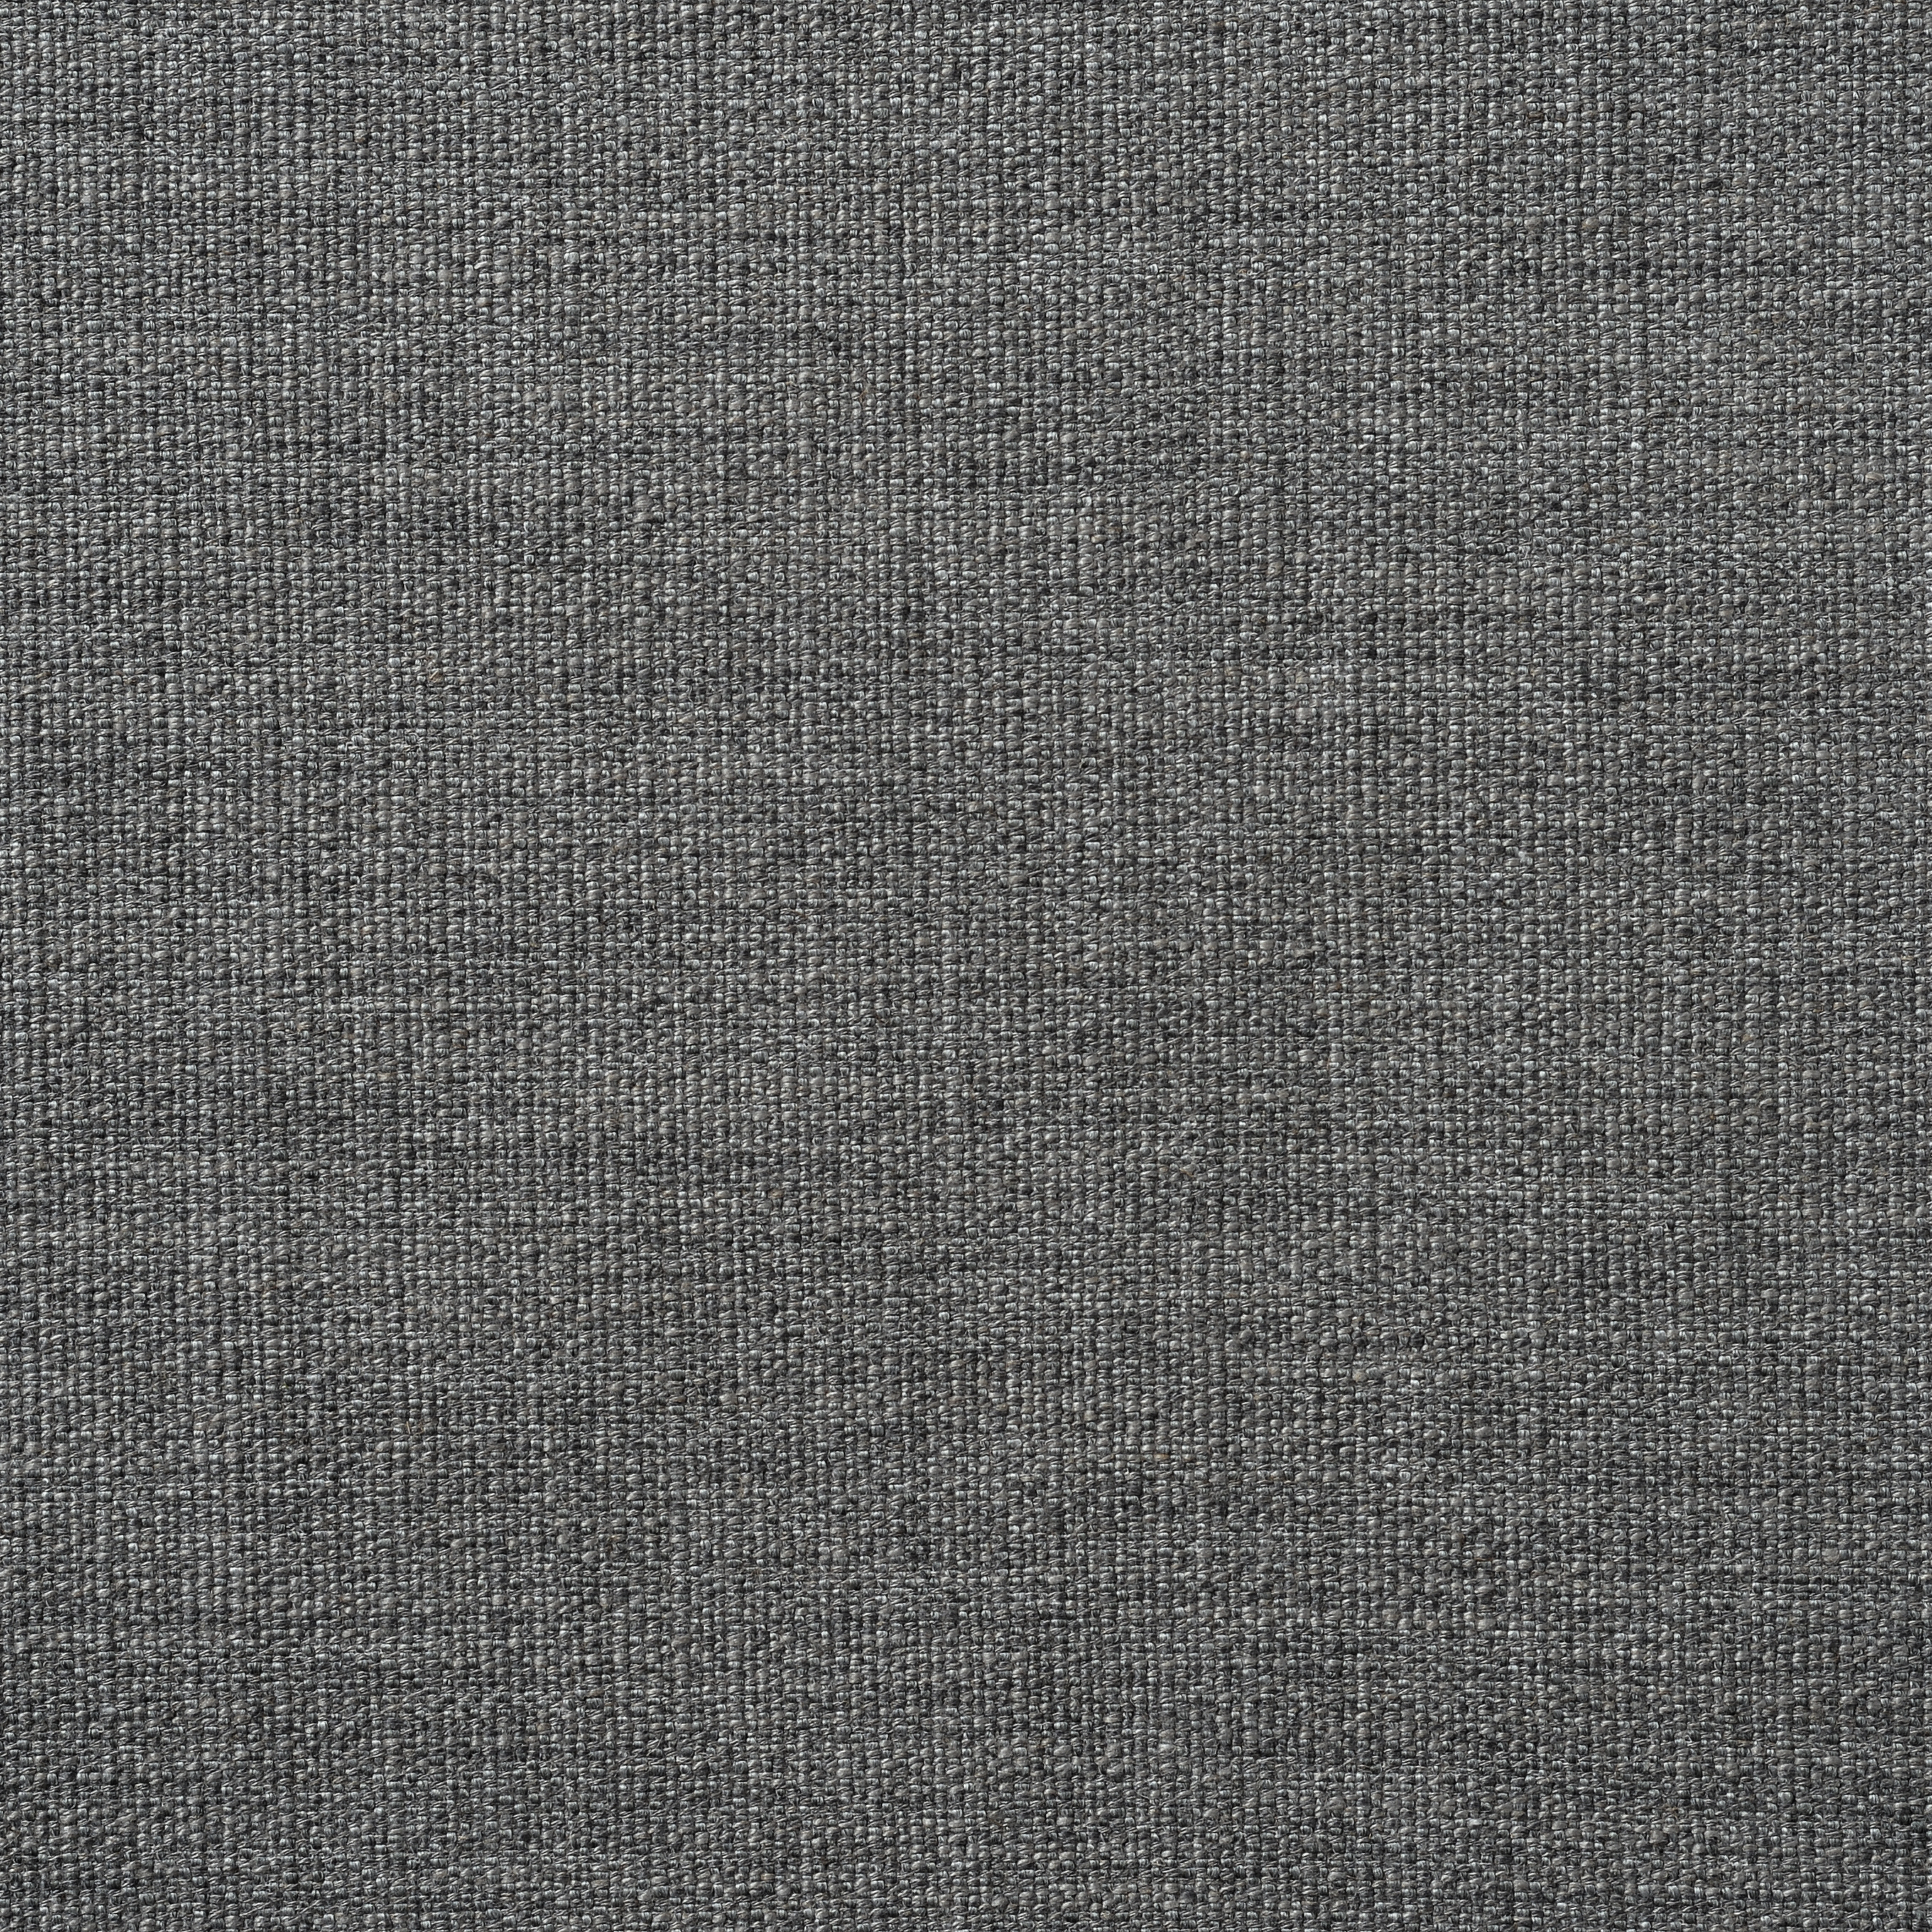 Talbot Rustic Weave - Grey Marl